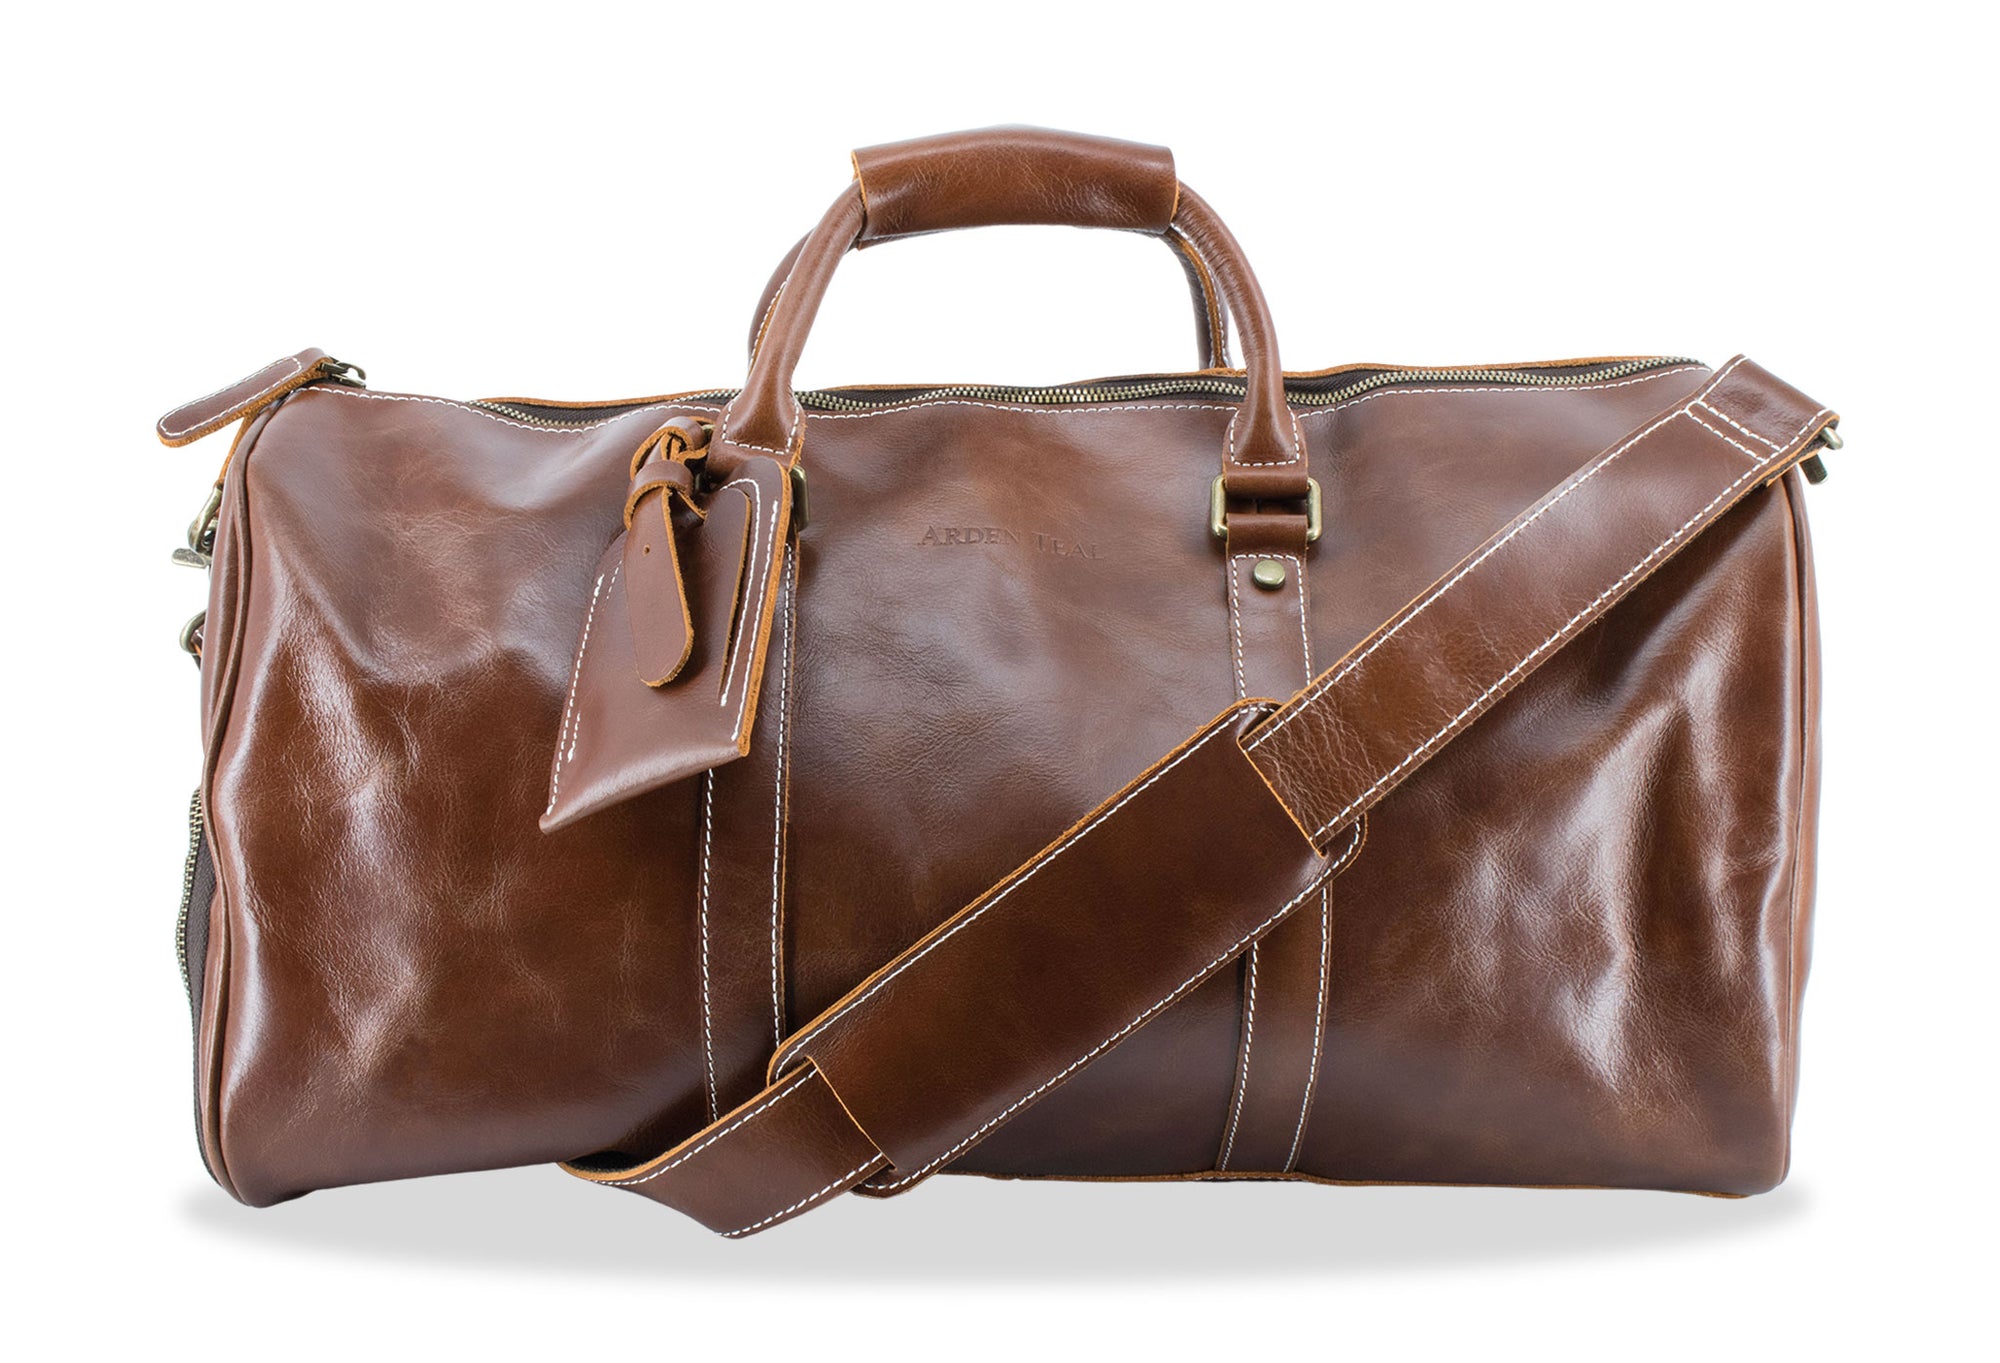 Kahmune 100% Genuine Italian Leather Tote Bag for Women